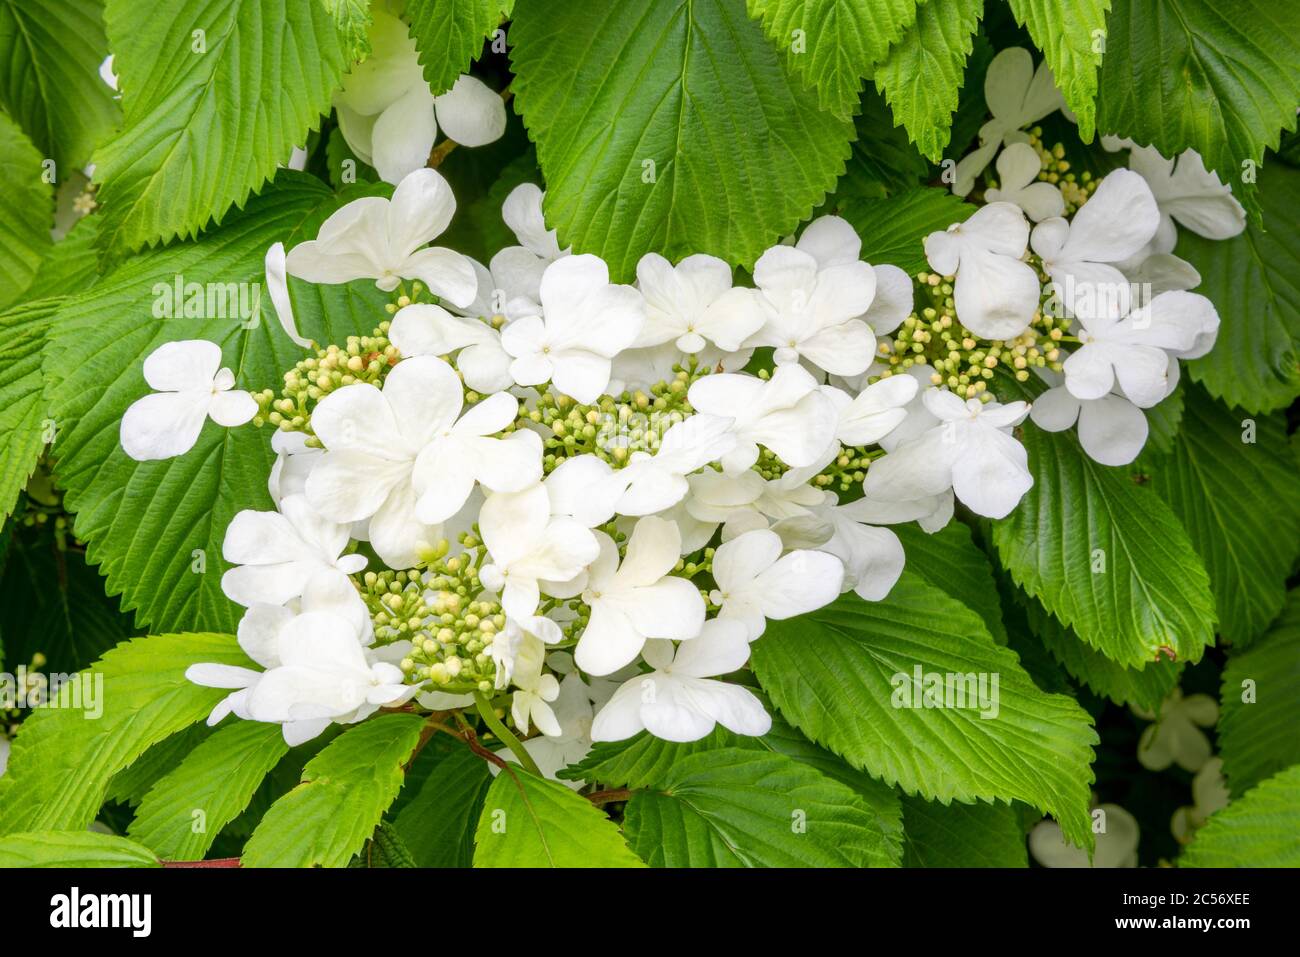 Primer plano de flores blancas Viburnum plicatum 'Mariesii' entre hojas verdes brillantes, Foto de stock